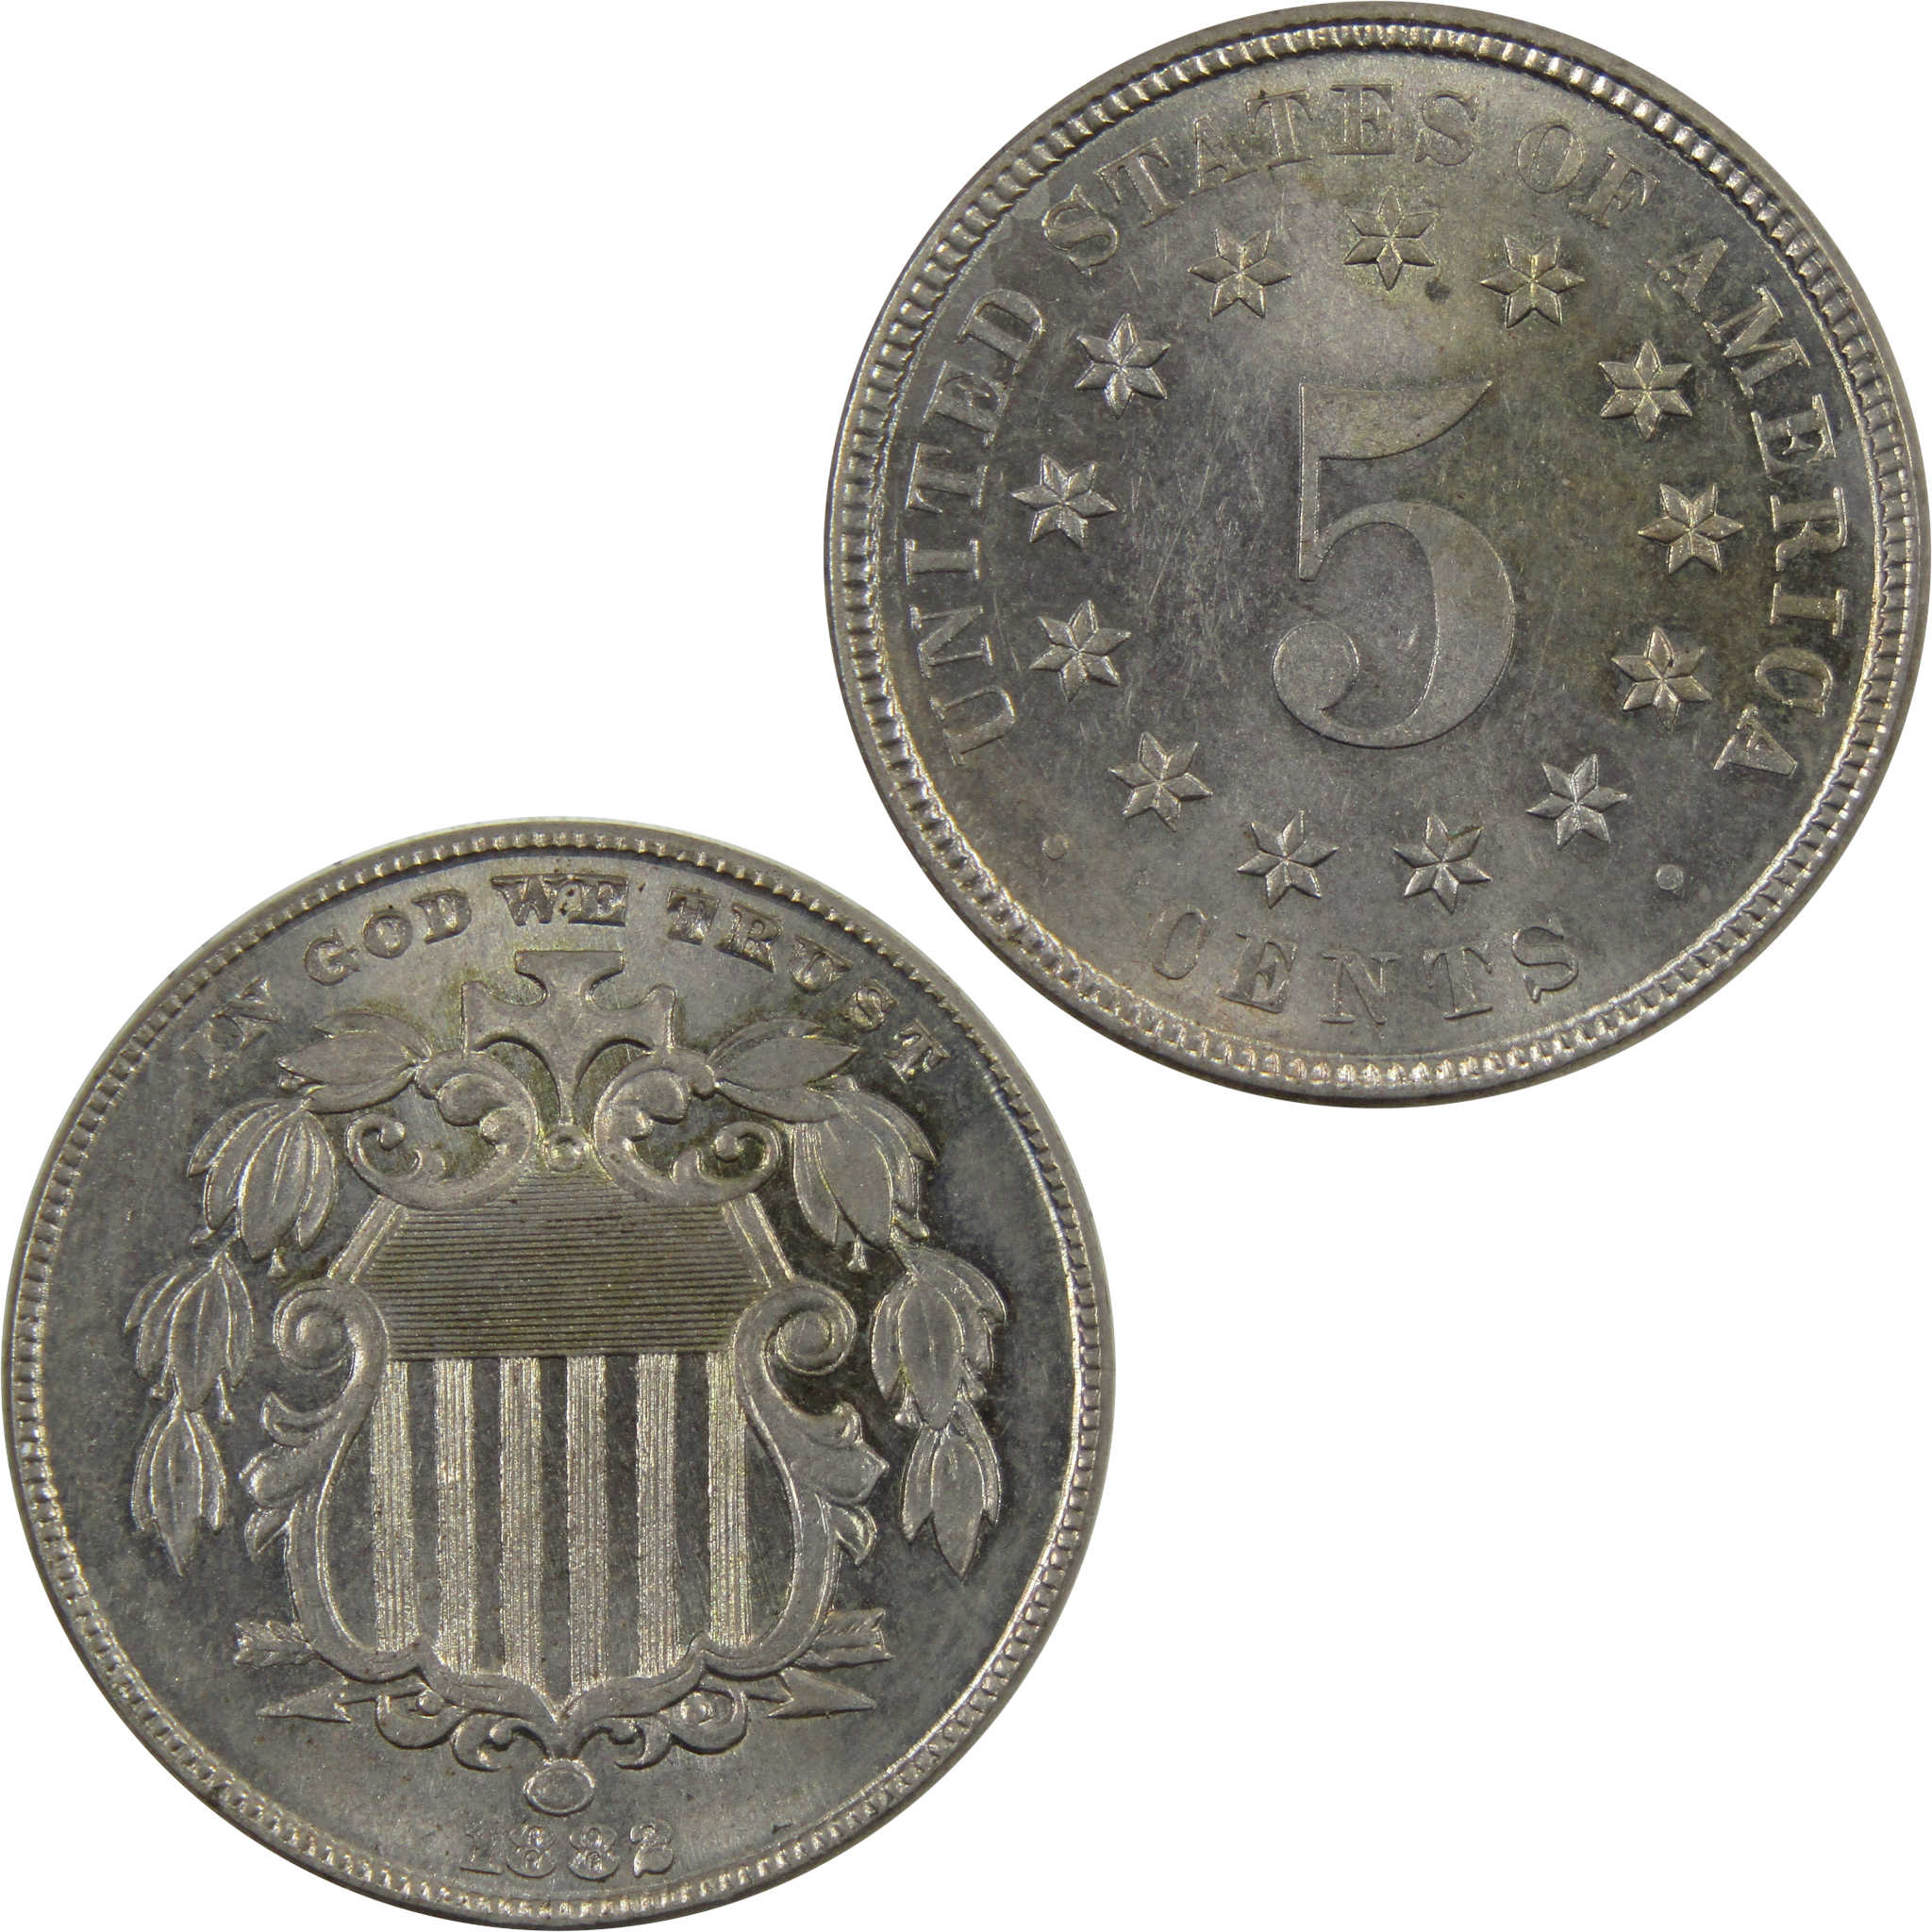 1882 Shield Nickel BU Choice Uncirculated 5c Coin SKU:I5058